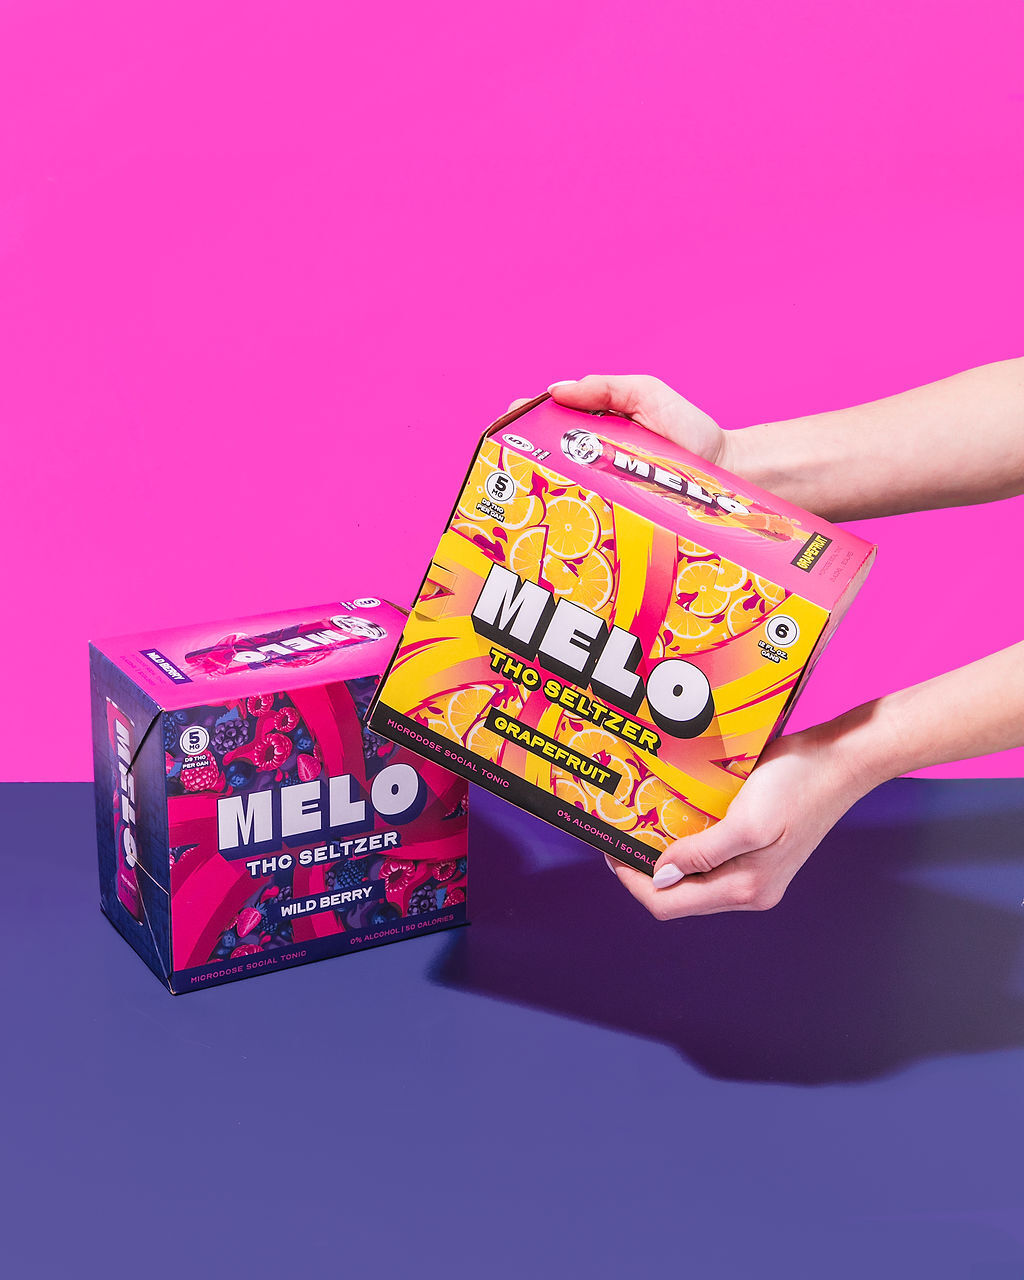 Exploring Melo’s THC Beverages: Grapefruit & Wild Berries Review